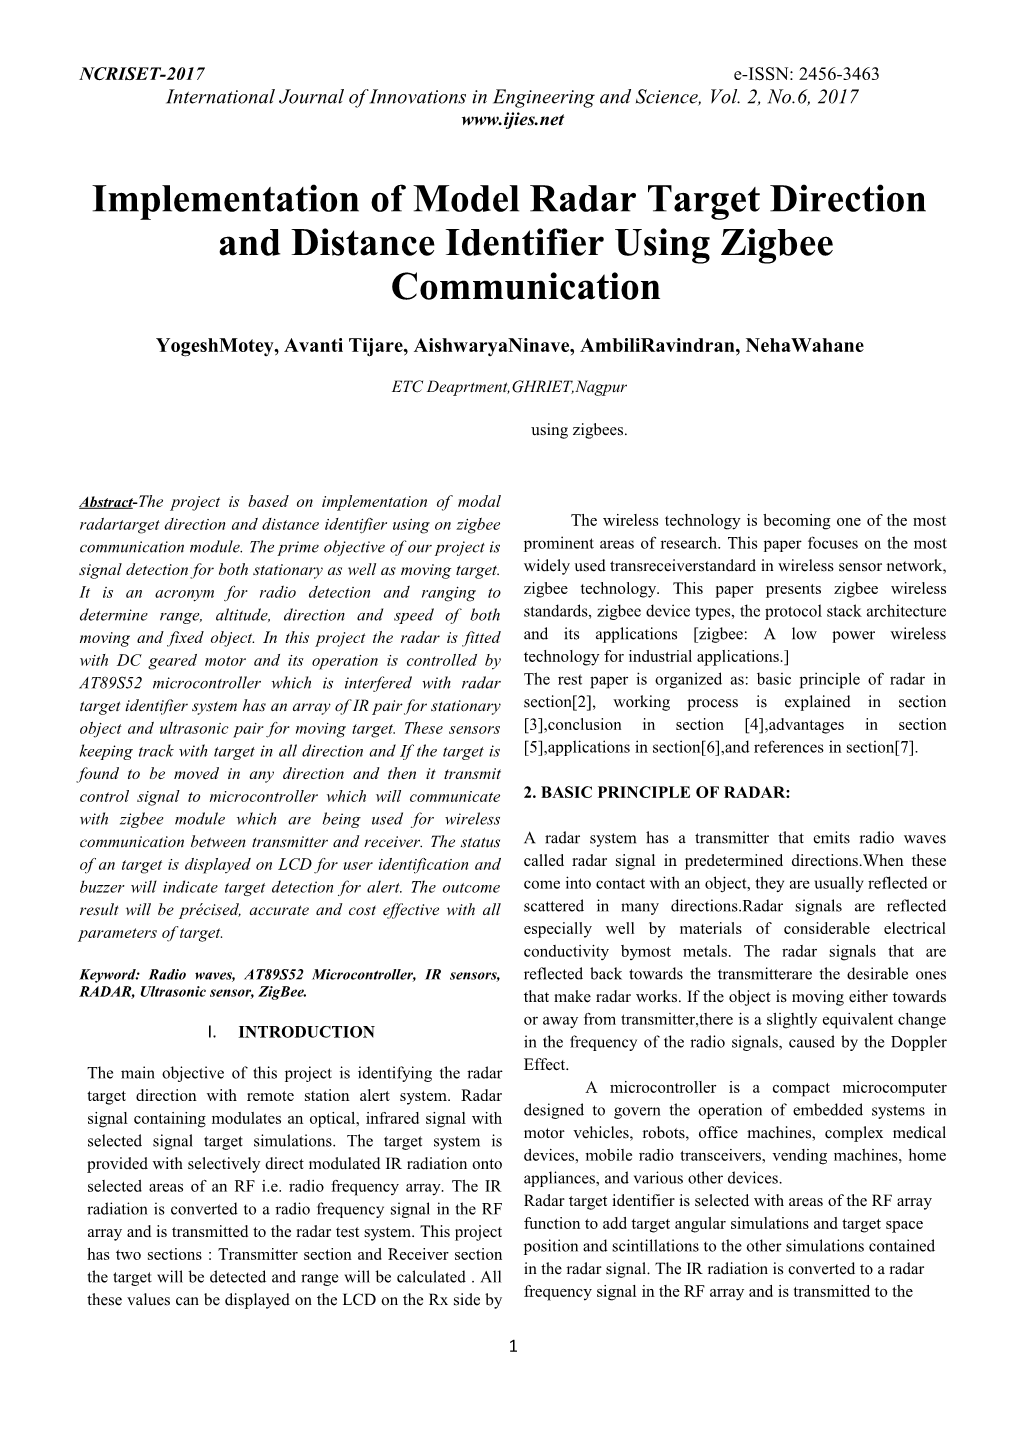 Implementation of Model Radar Target Direction and Distance Identifier Using Zigbee